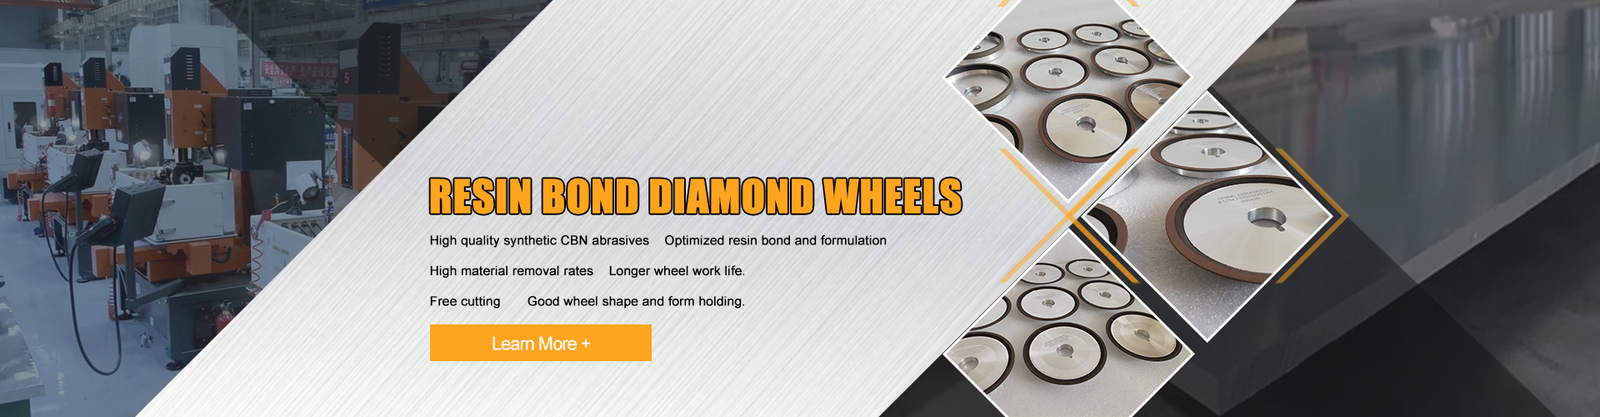 Legame Diamond Wheels della resina